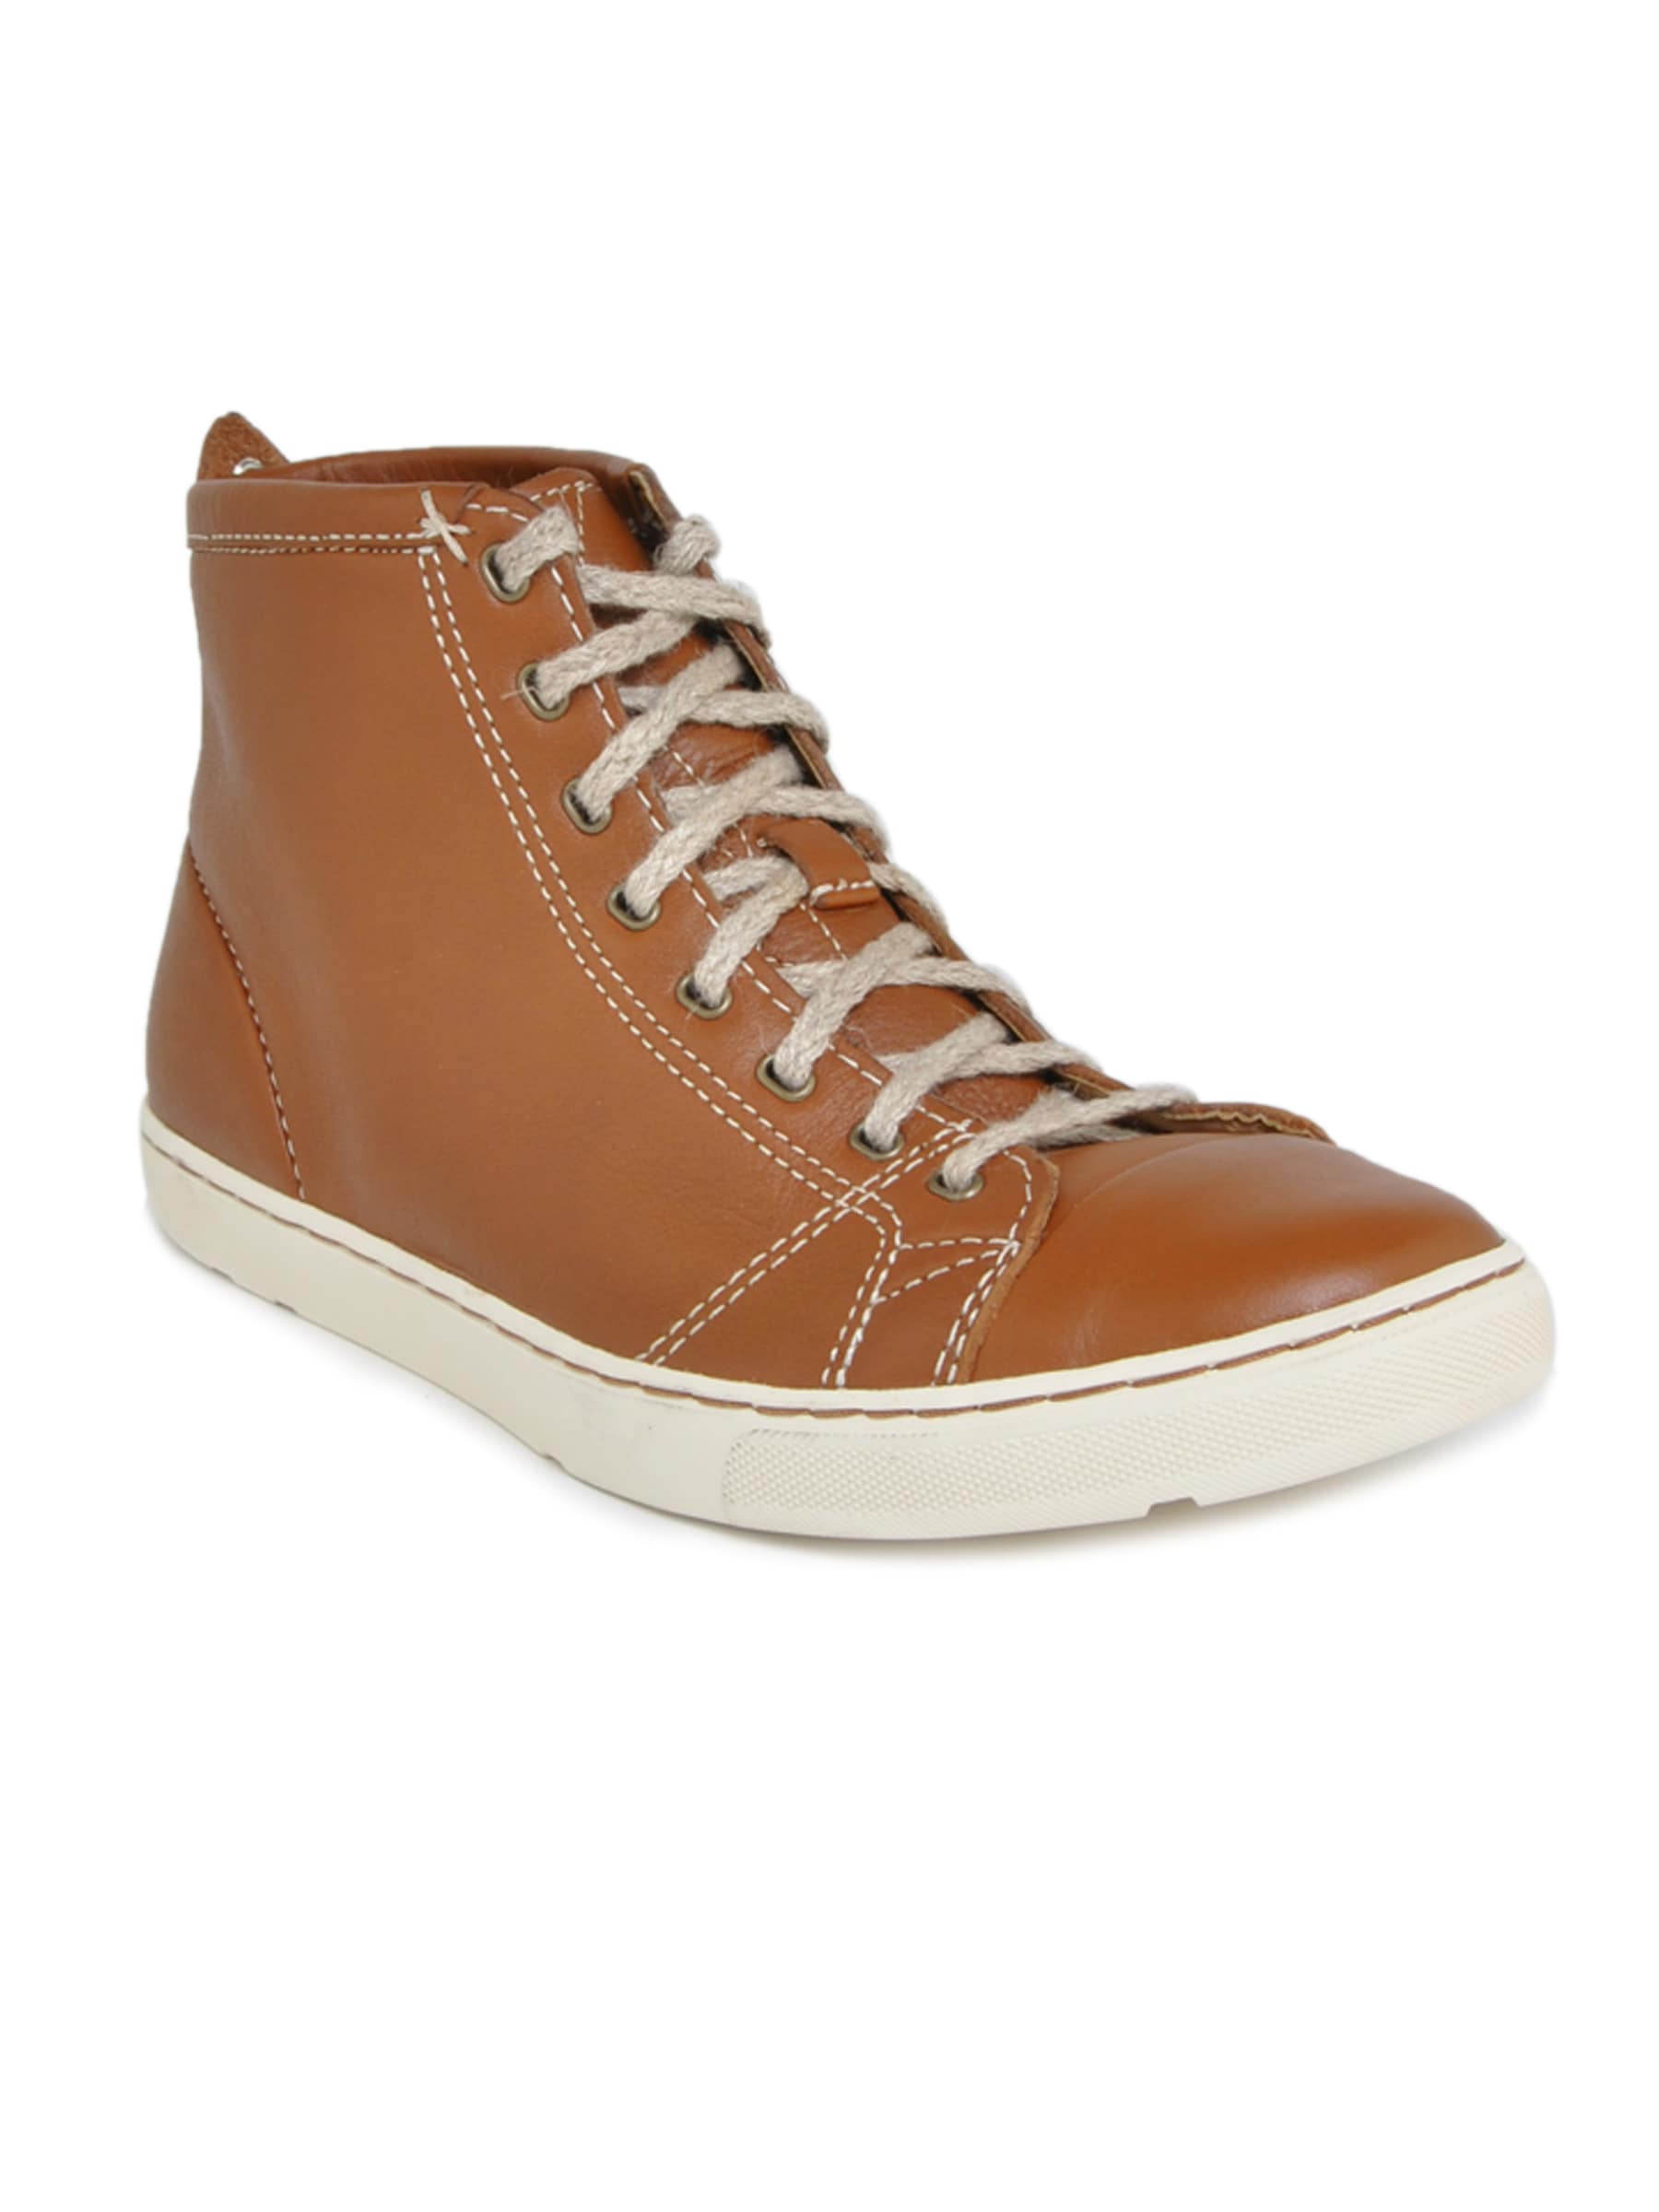 Rockport Men Captoe Brown Casual Shoes